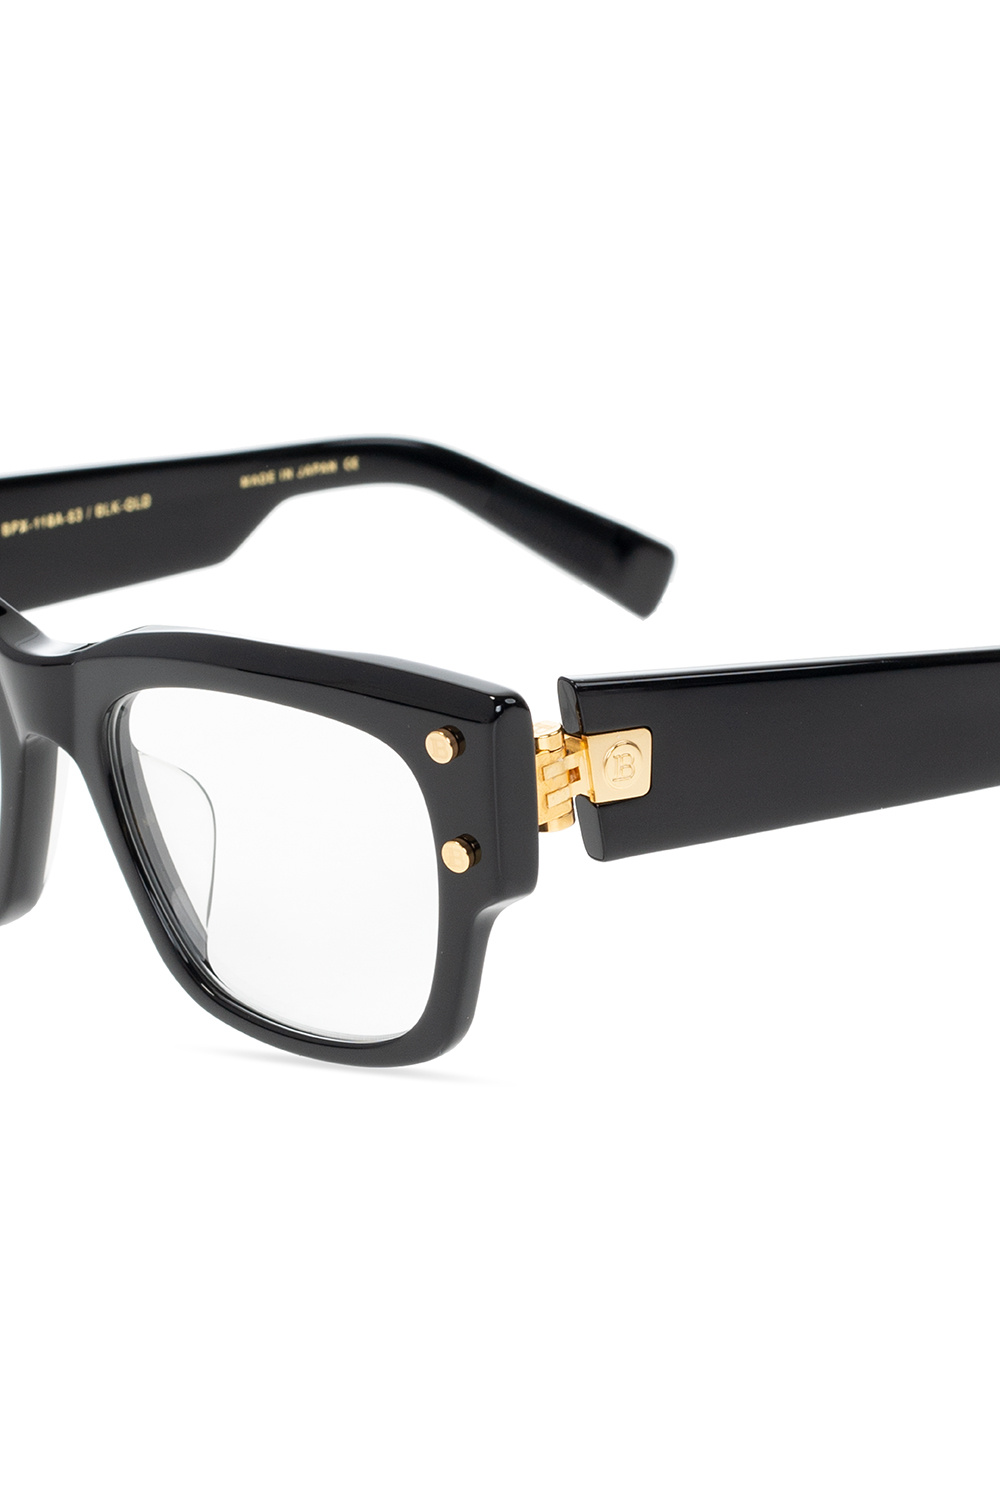 Black Optical glasses with logo Balmain - Vitkac GB